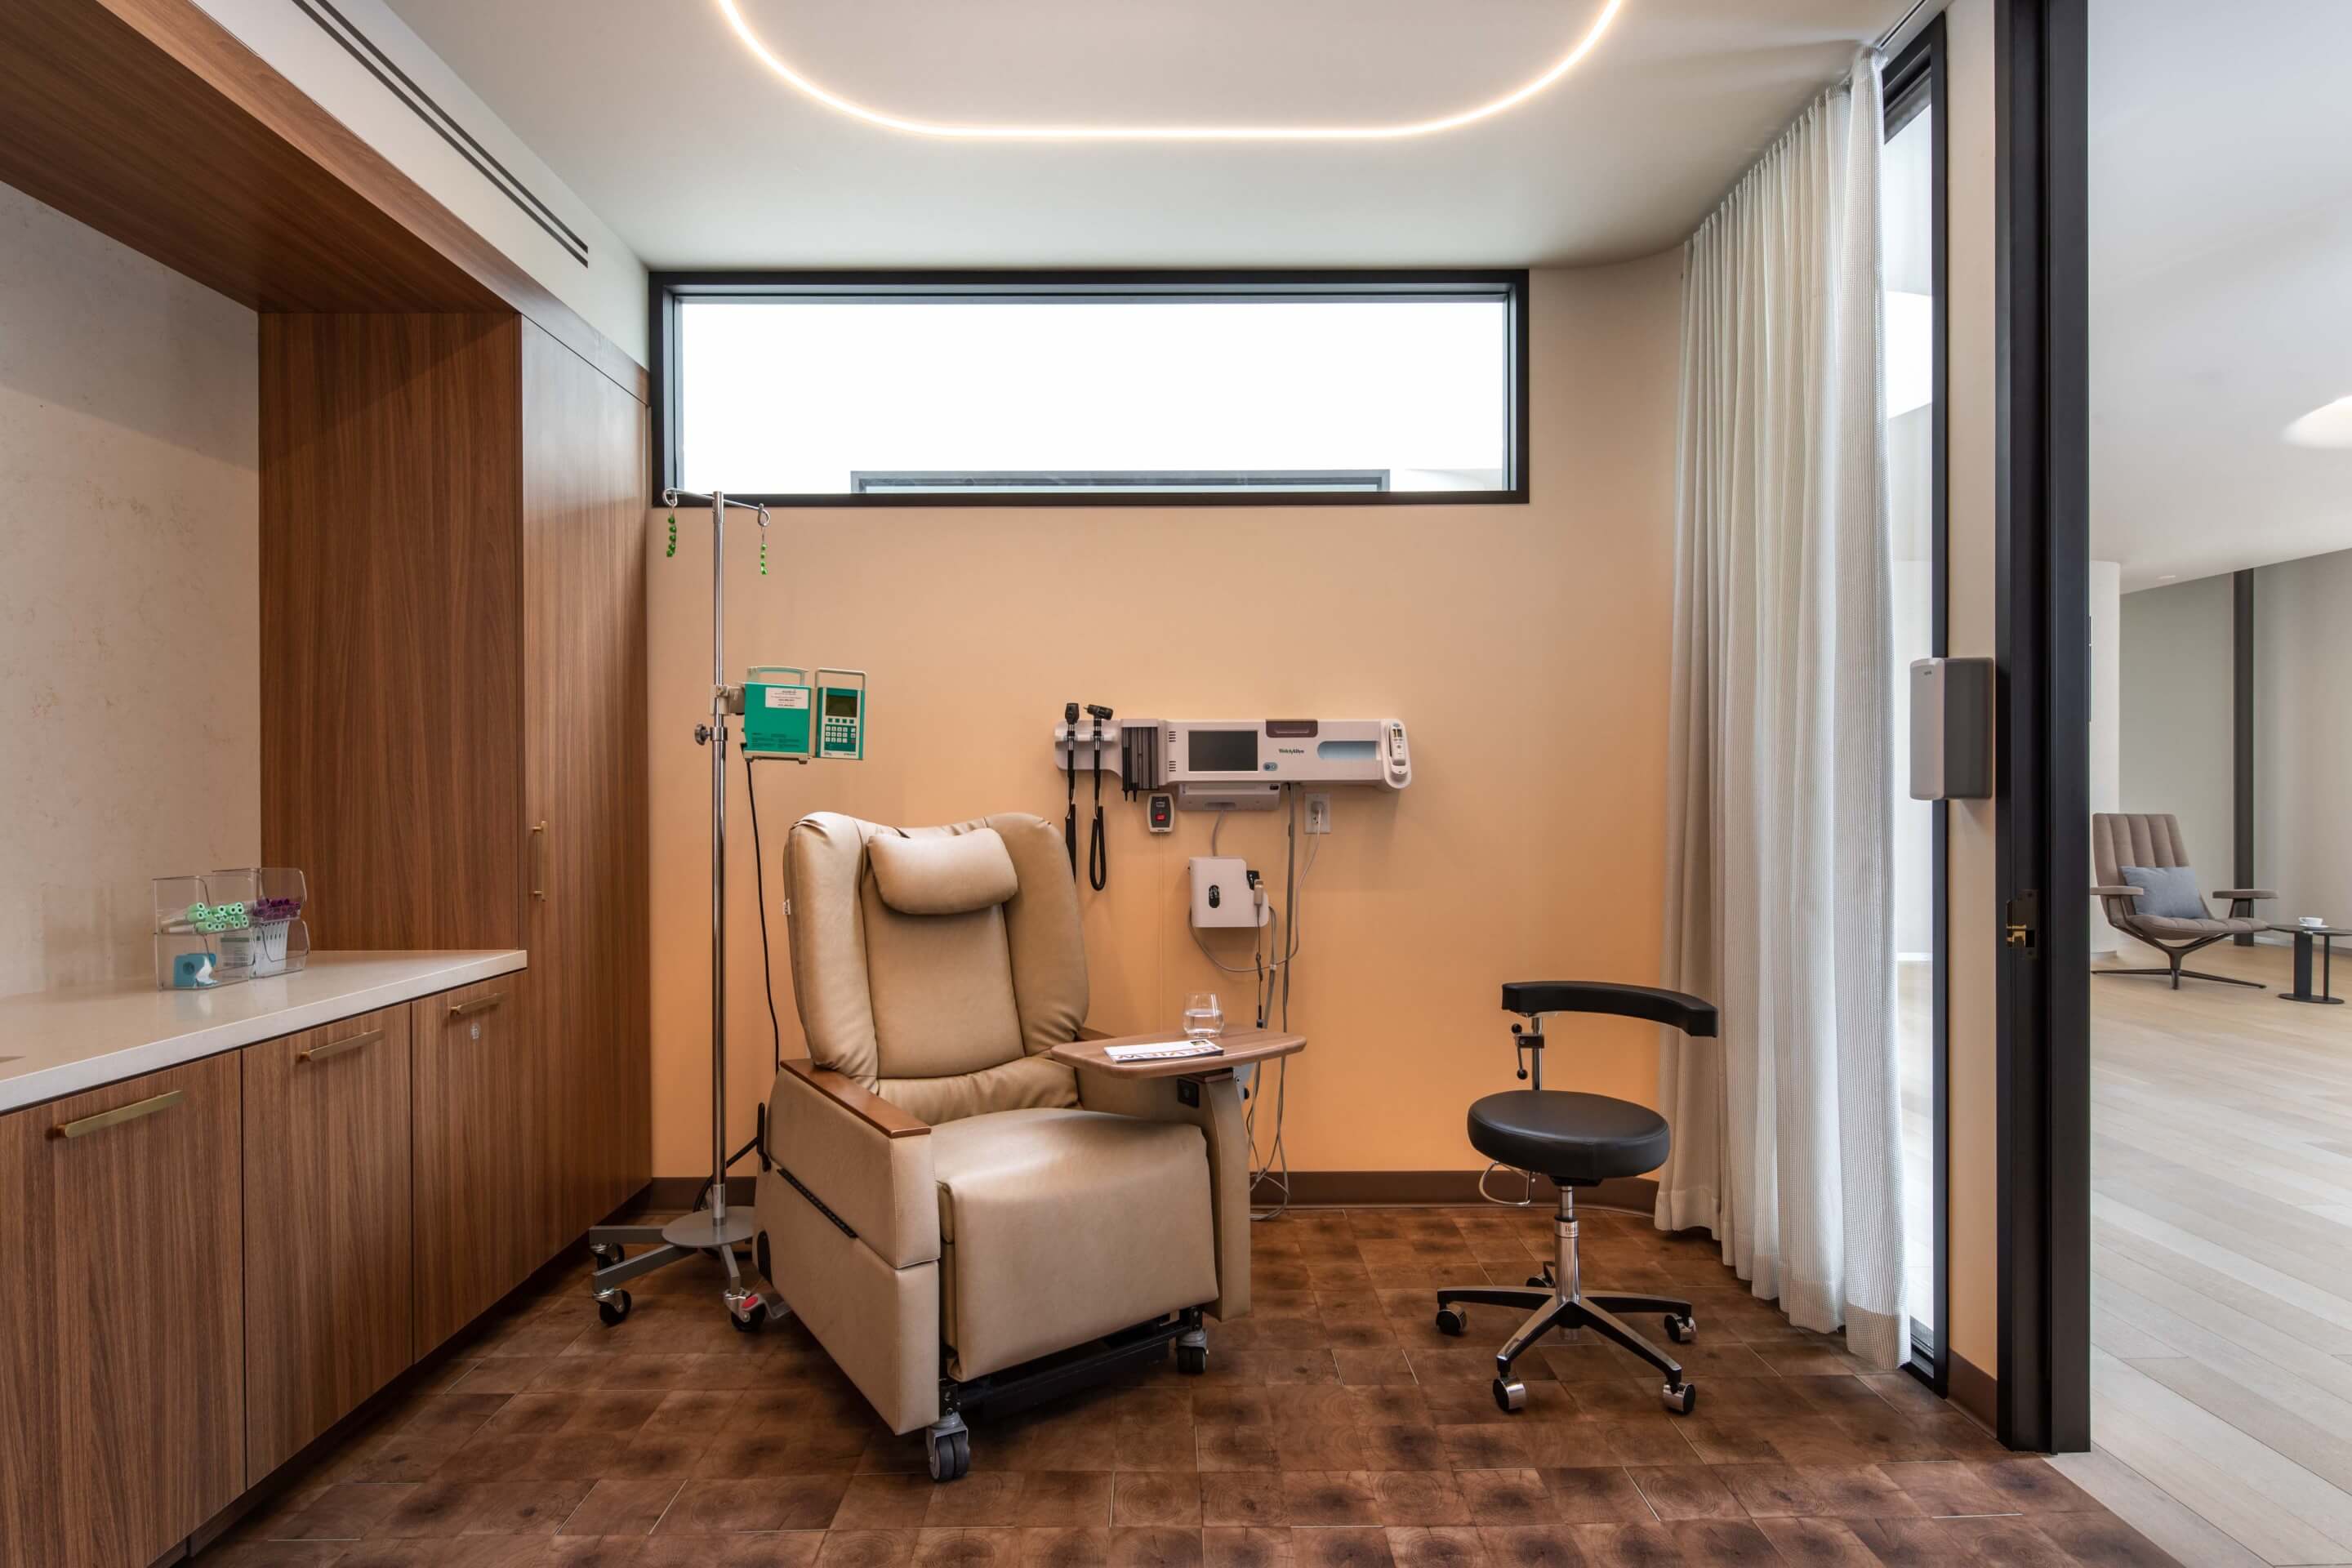 a comfortable patient treatment room